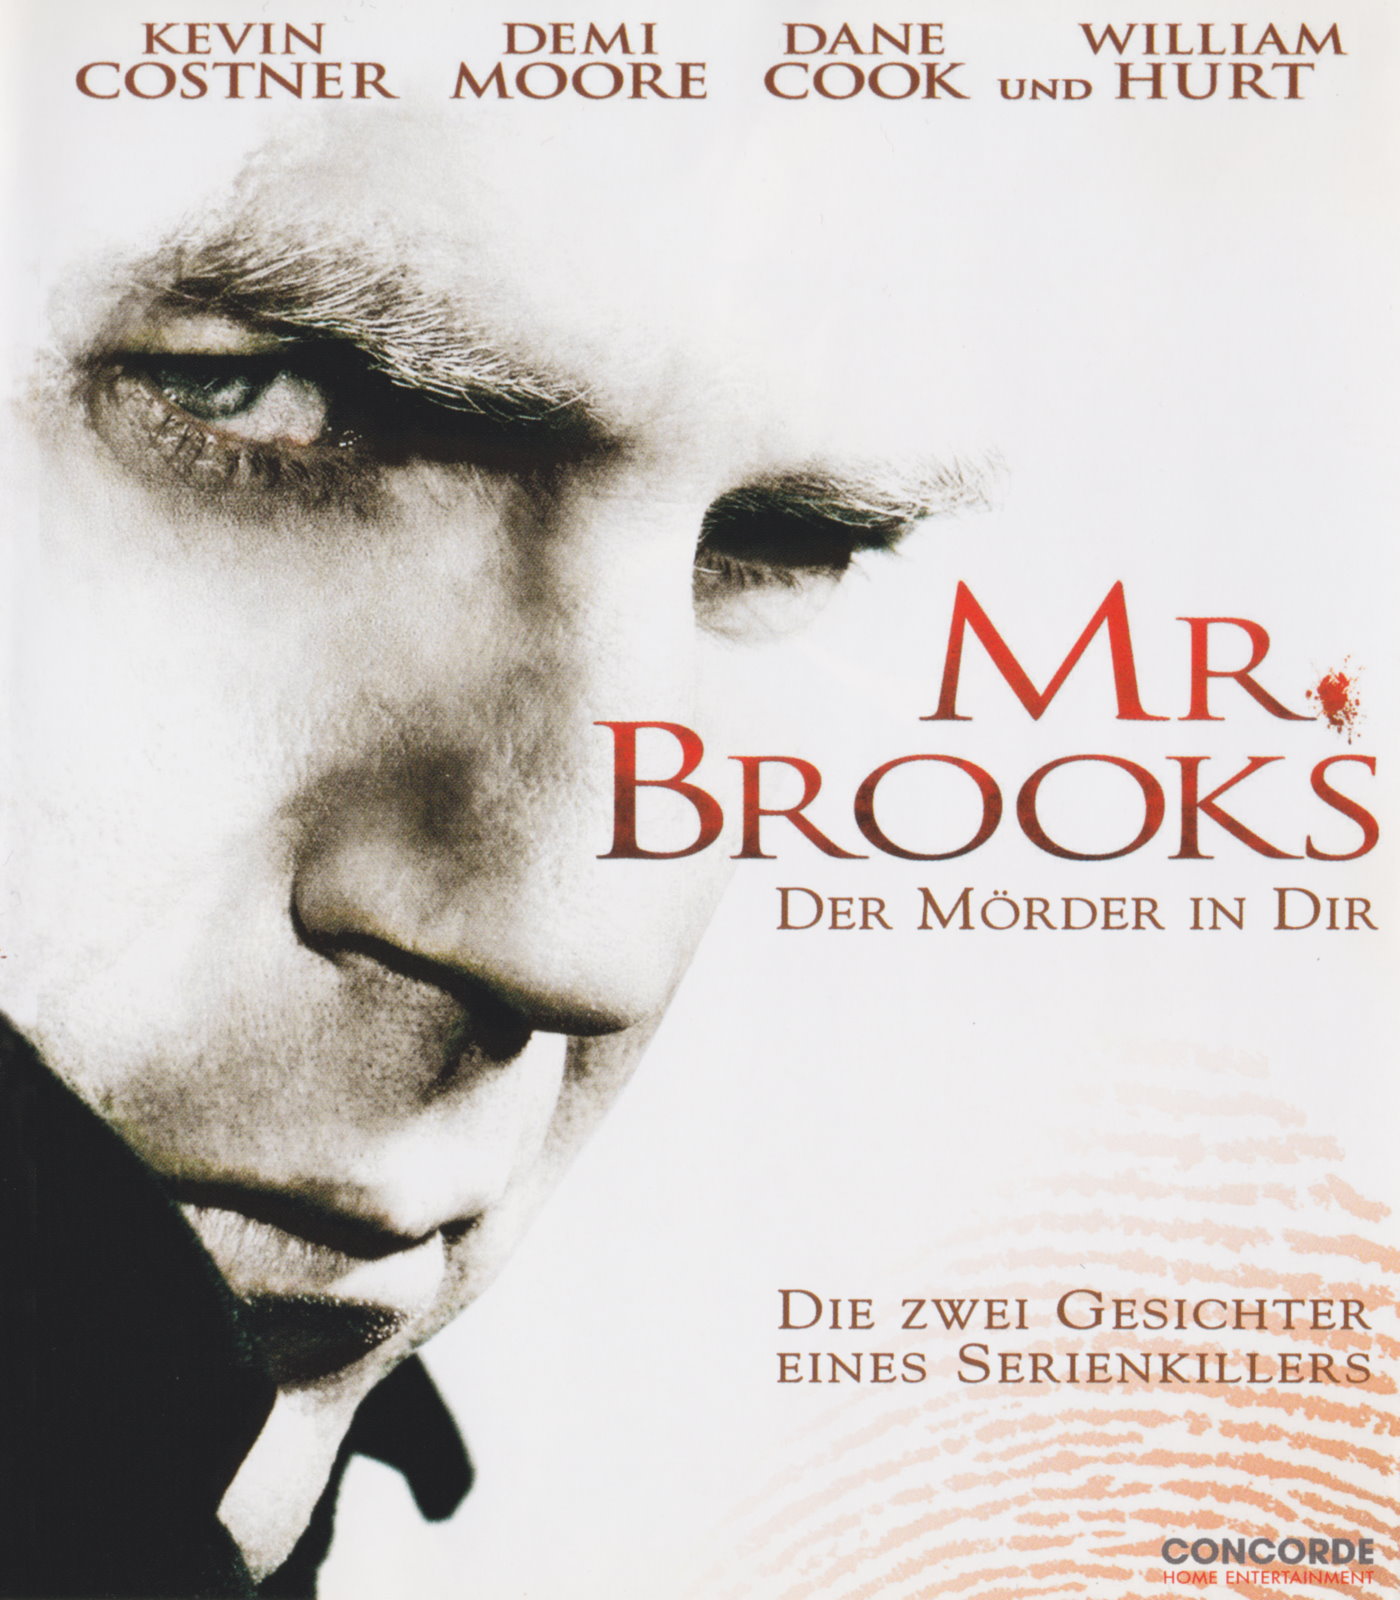 Cover - Mr. Brooks - Der Mörder in dir.jpg